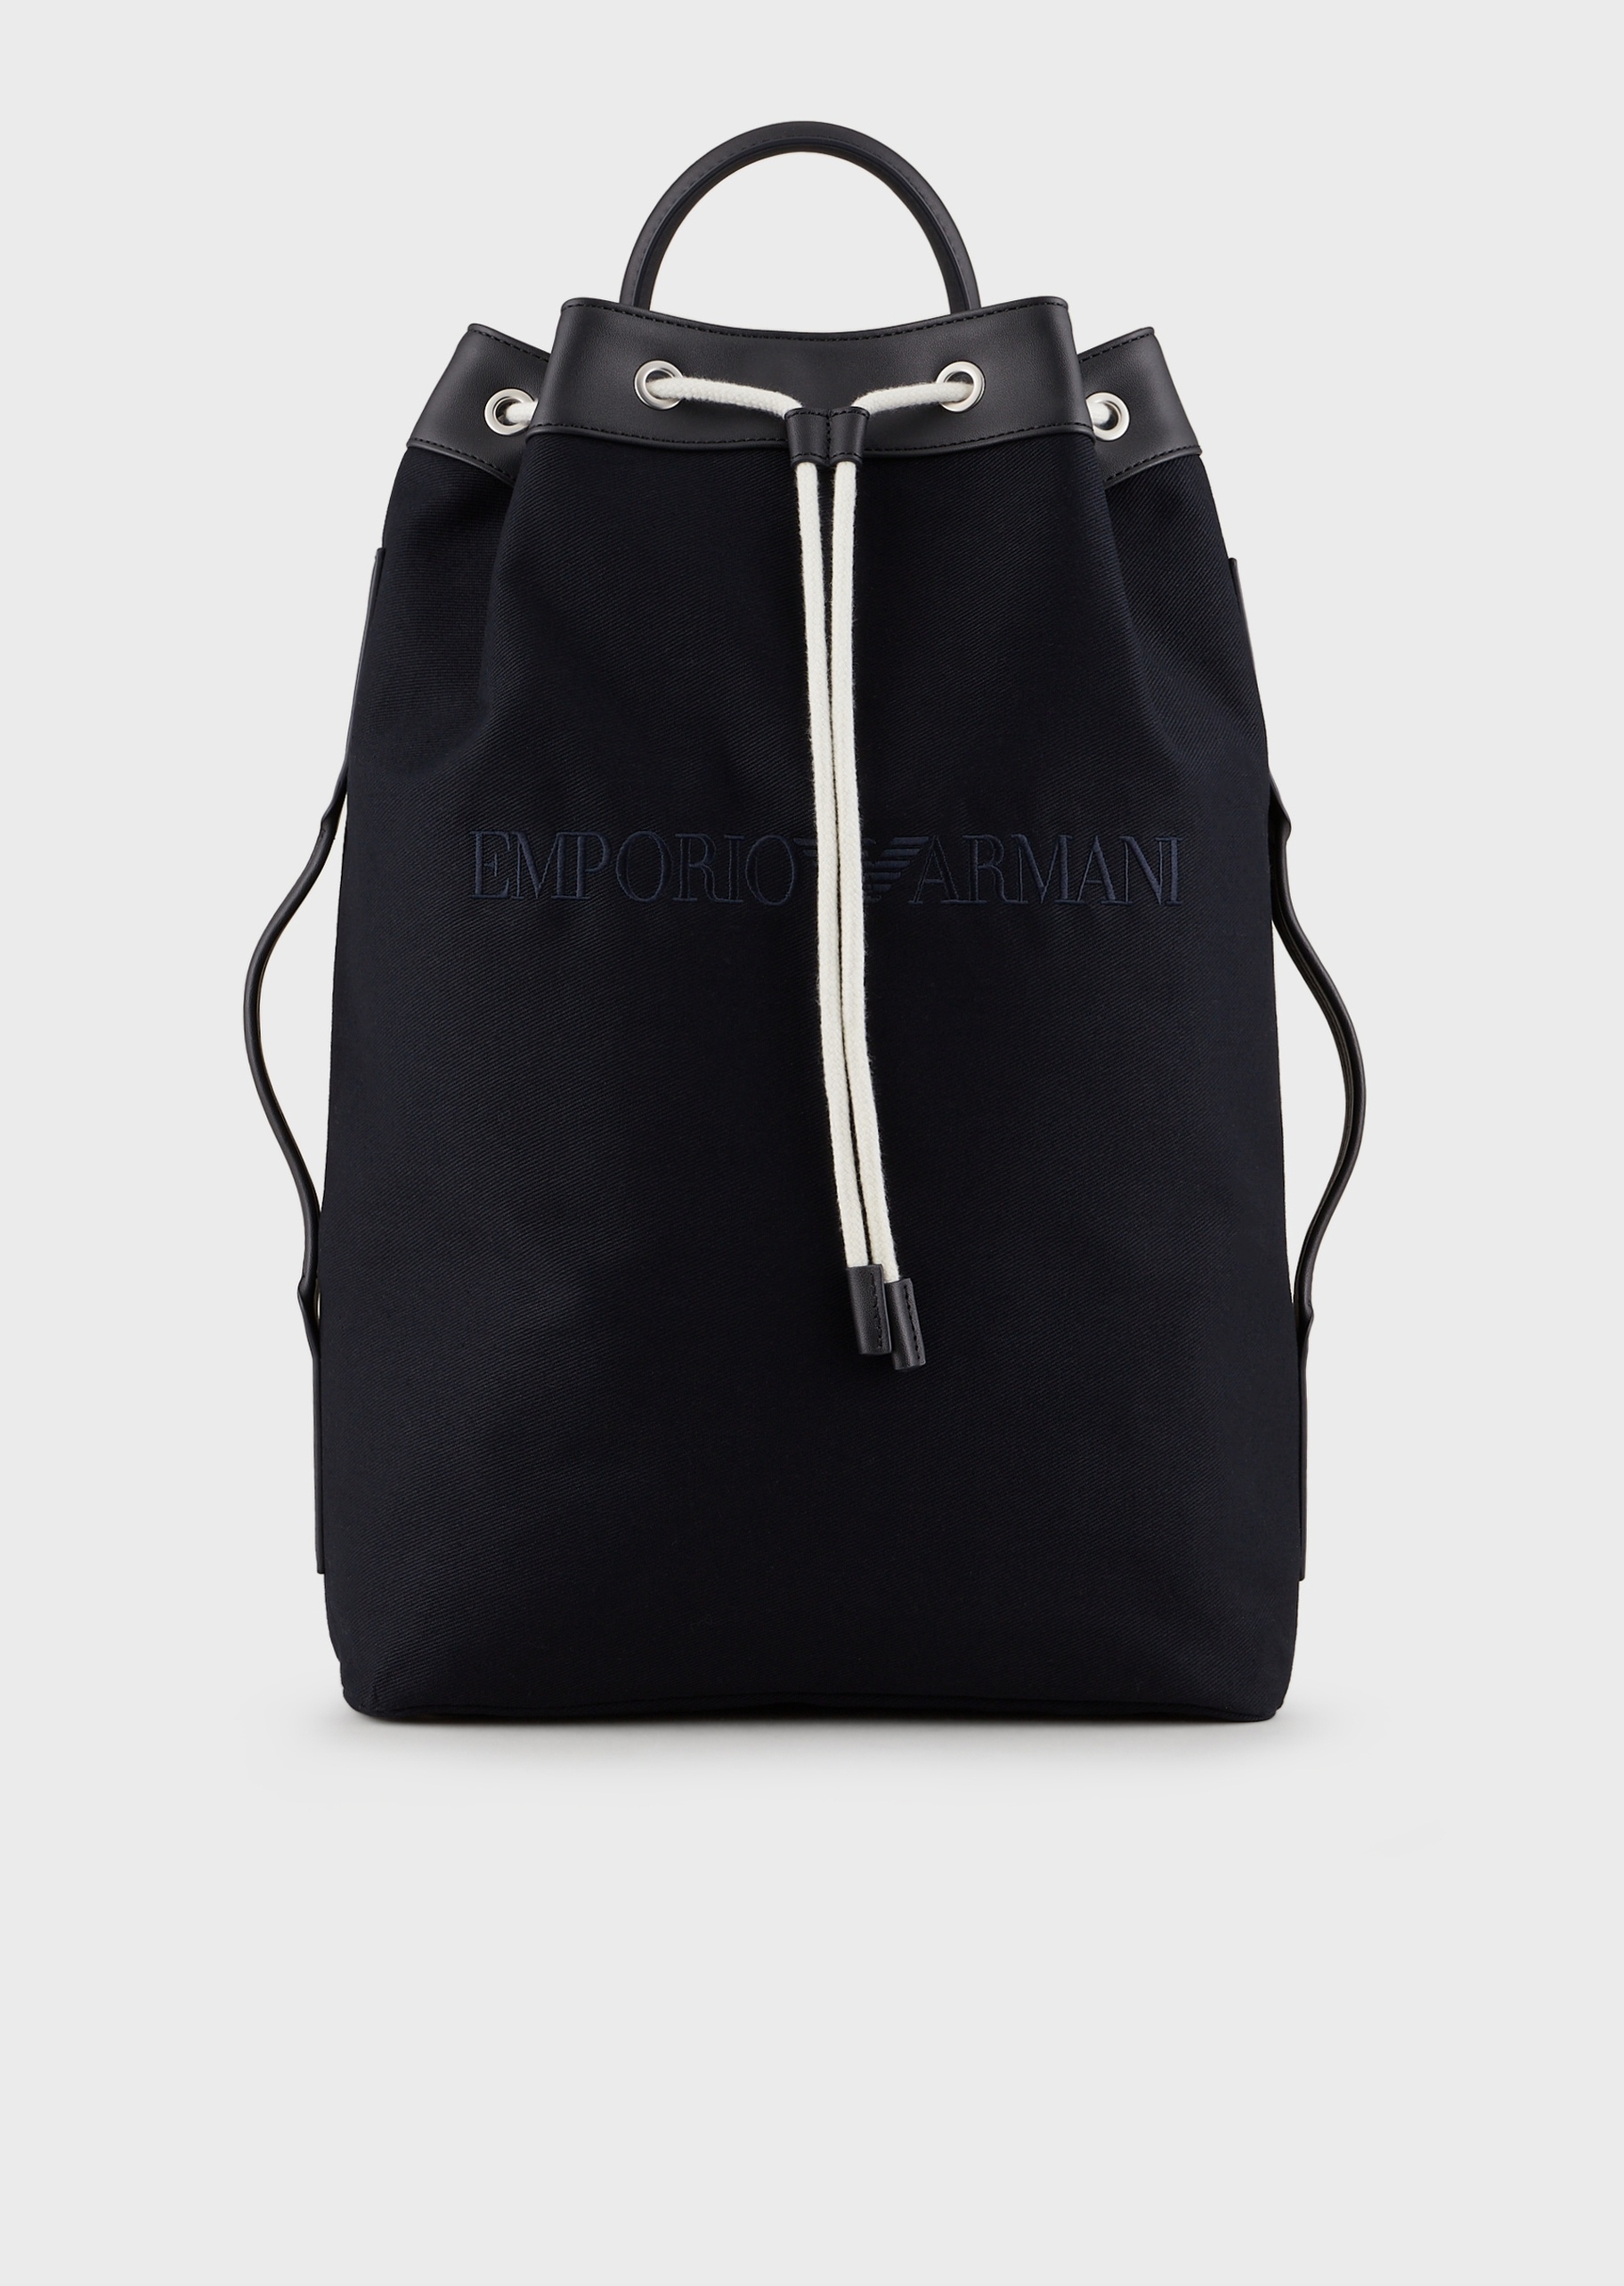 Emporio Armani 标识刺绣抽绳旅行袋